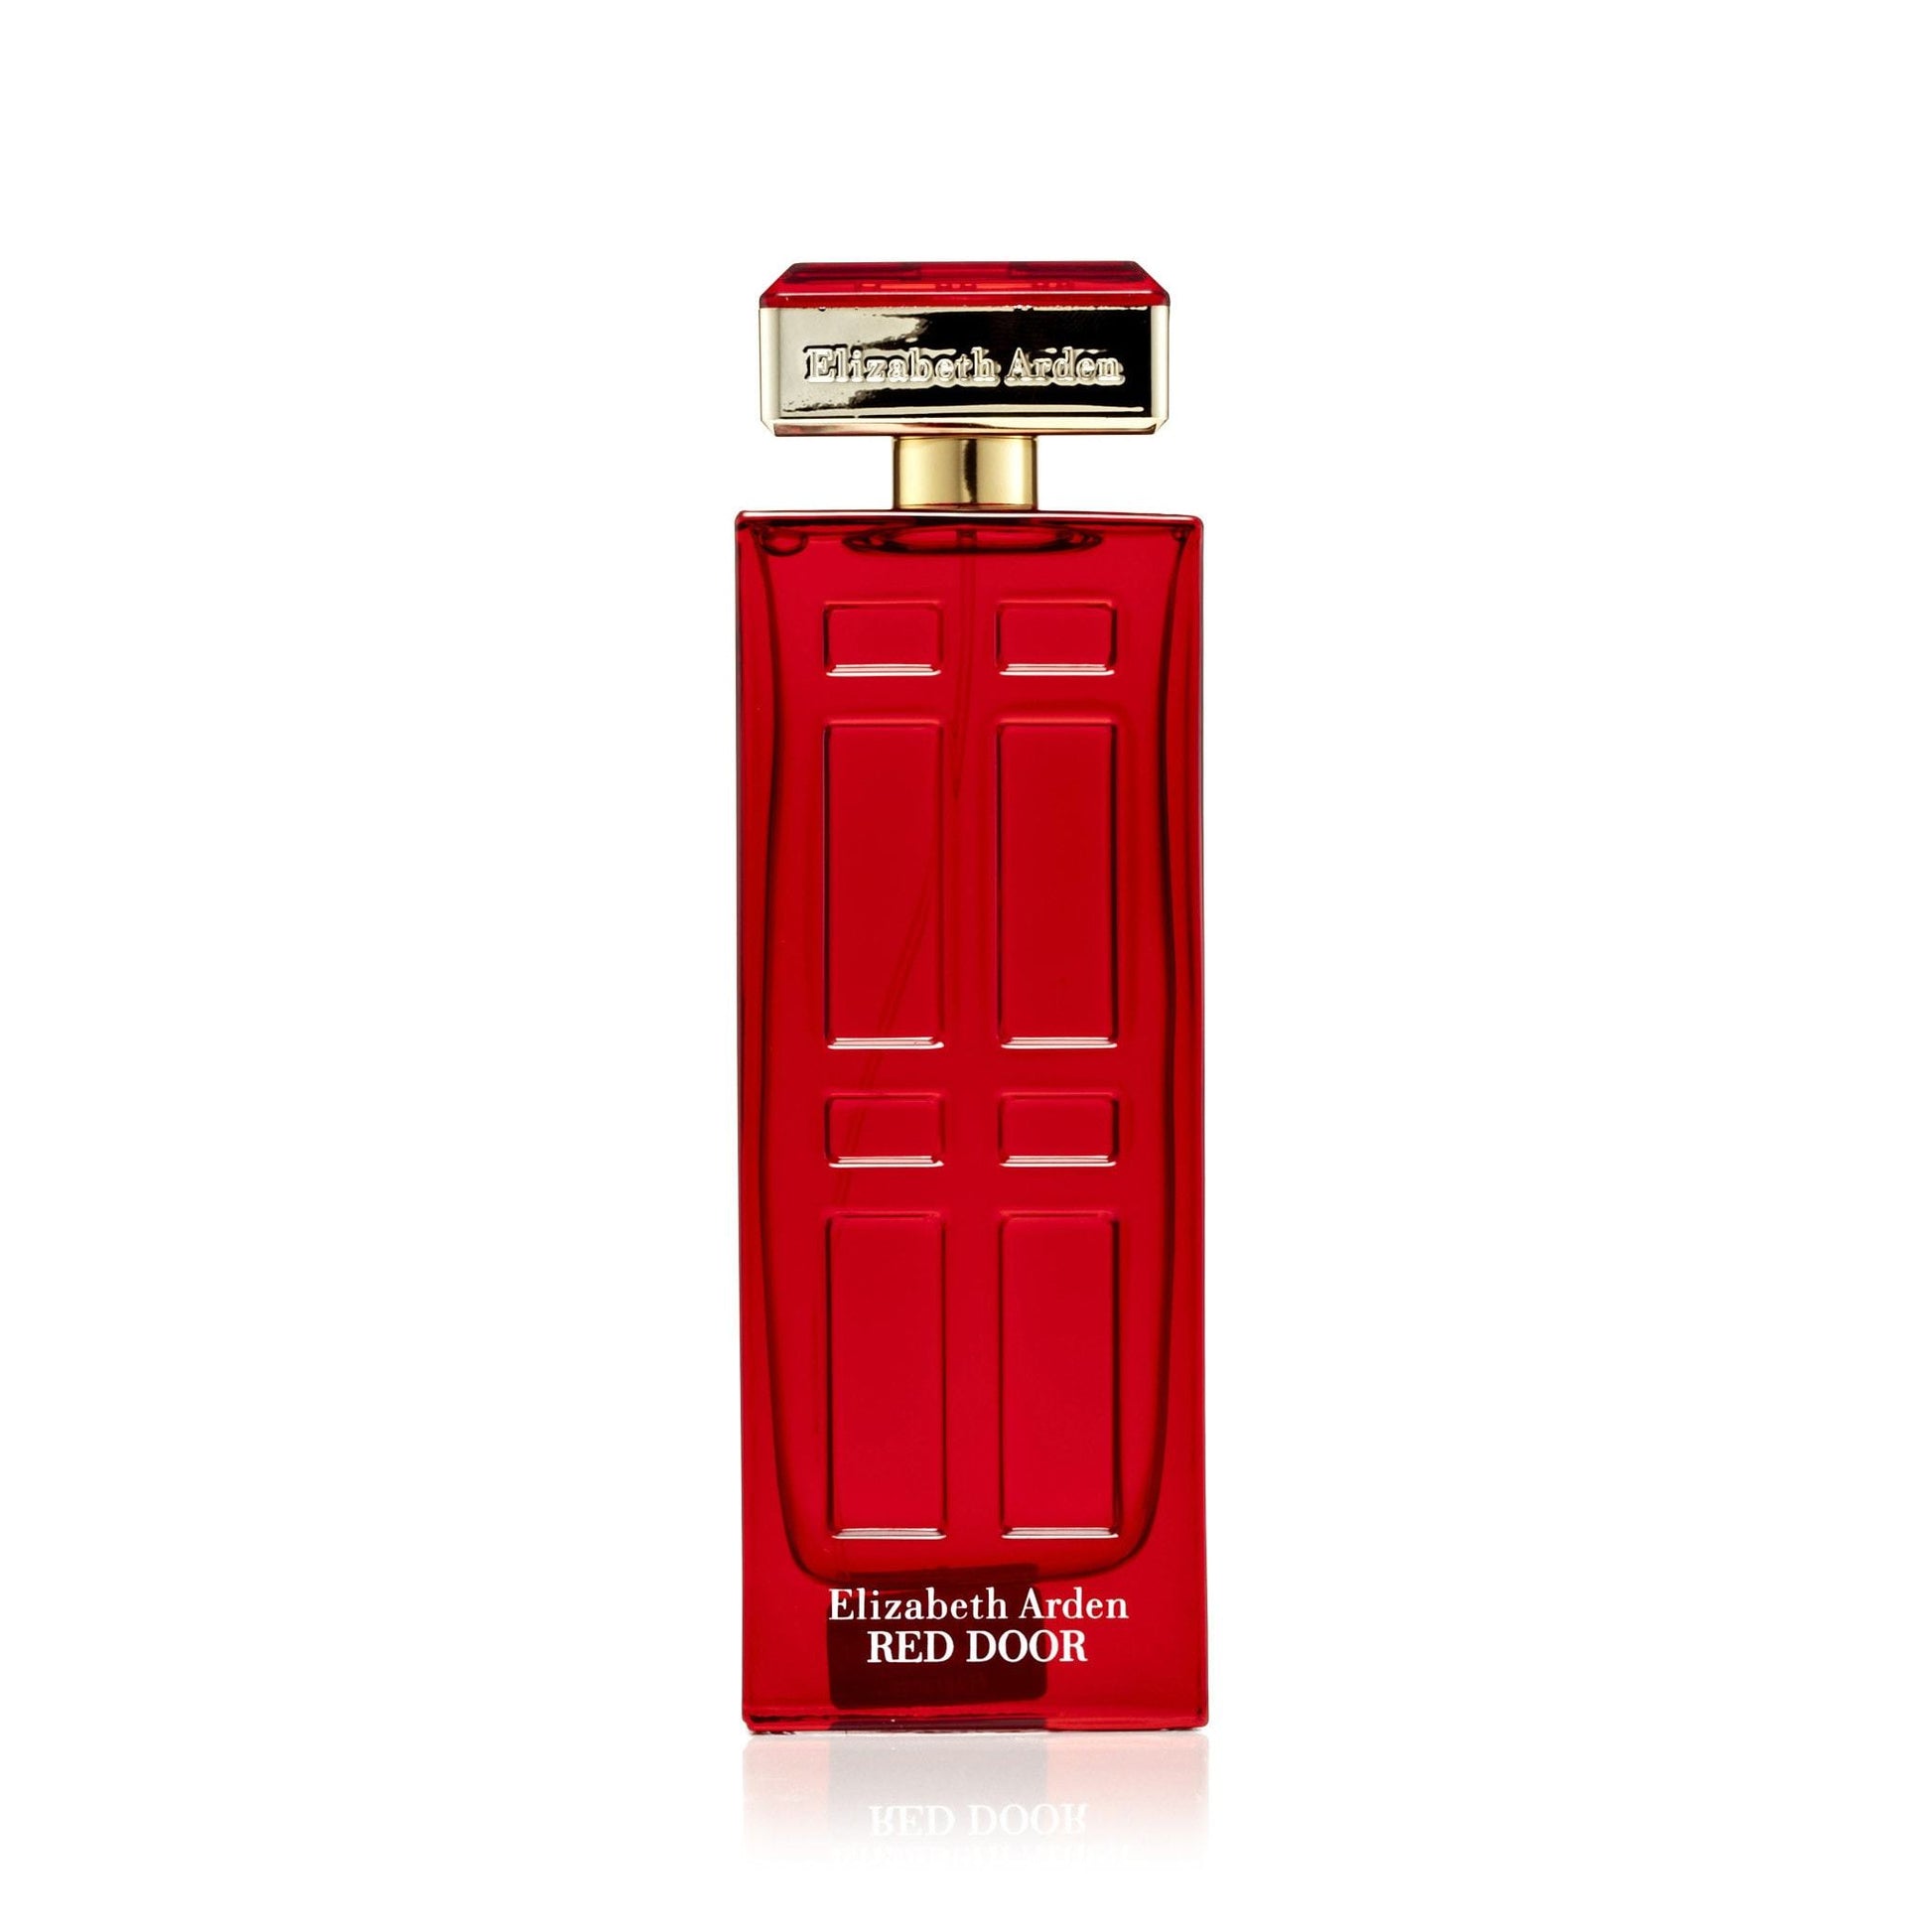 Red Door Eau de Toilette Spray for Women by Elizabeth Arden, Product image 5